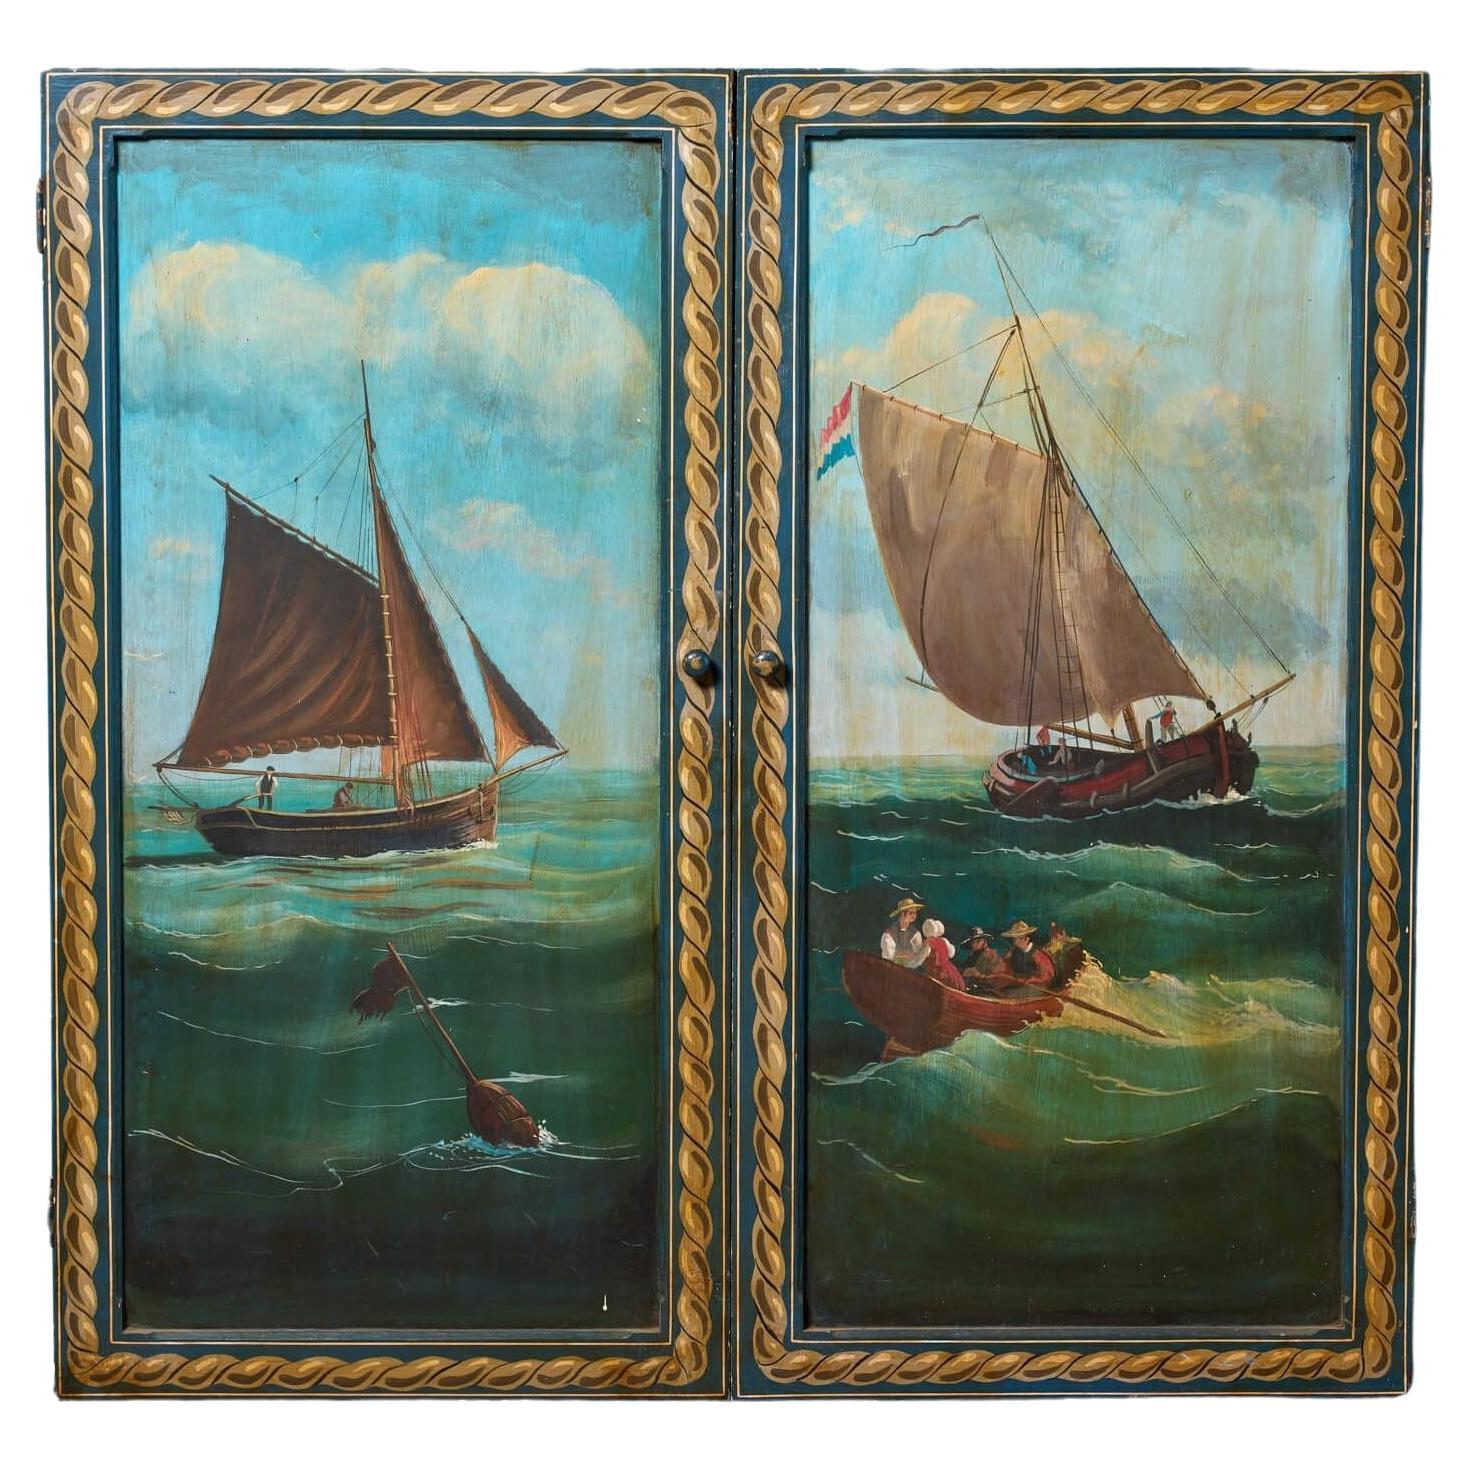 Set of Hand Painted Cupboard Doors Depicting A Maritime Scene